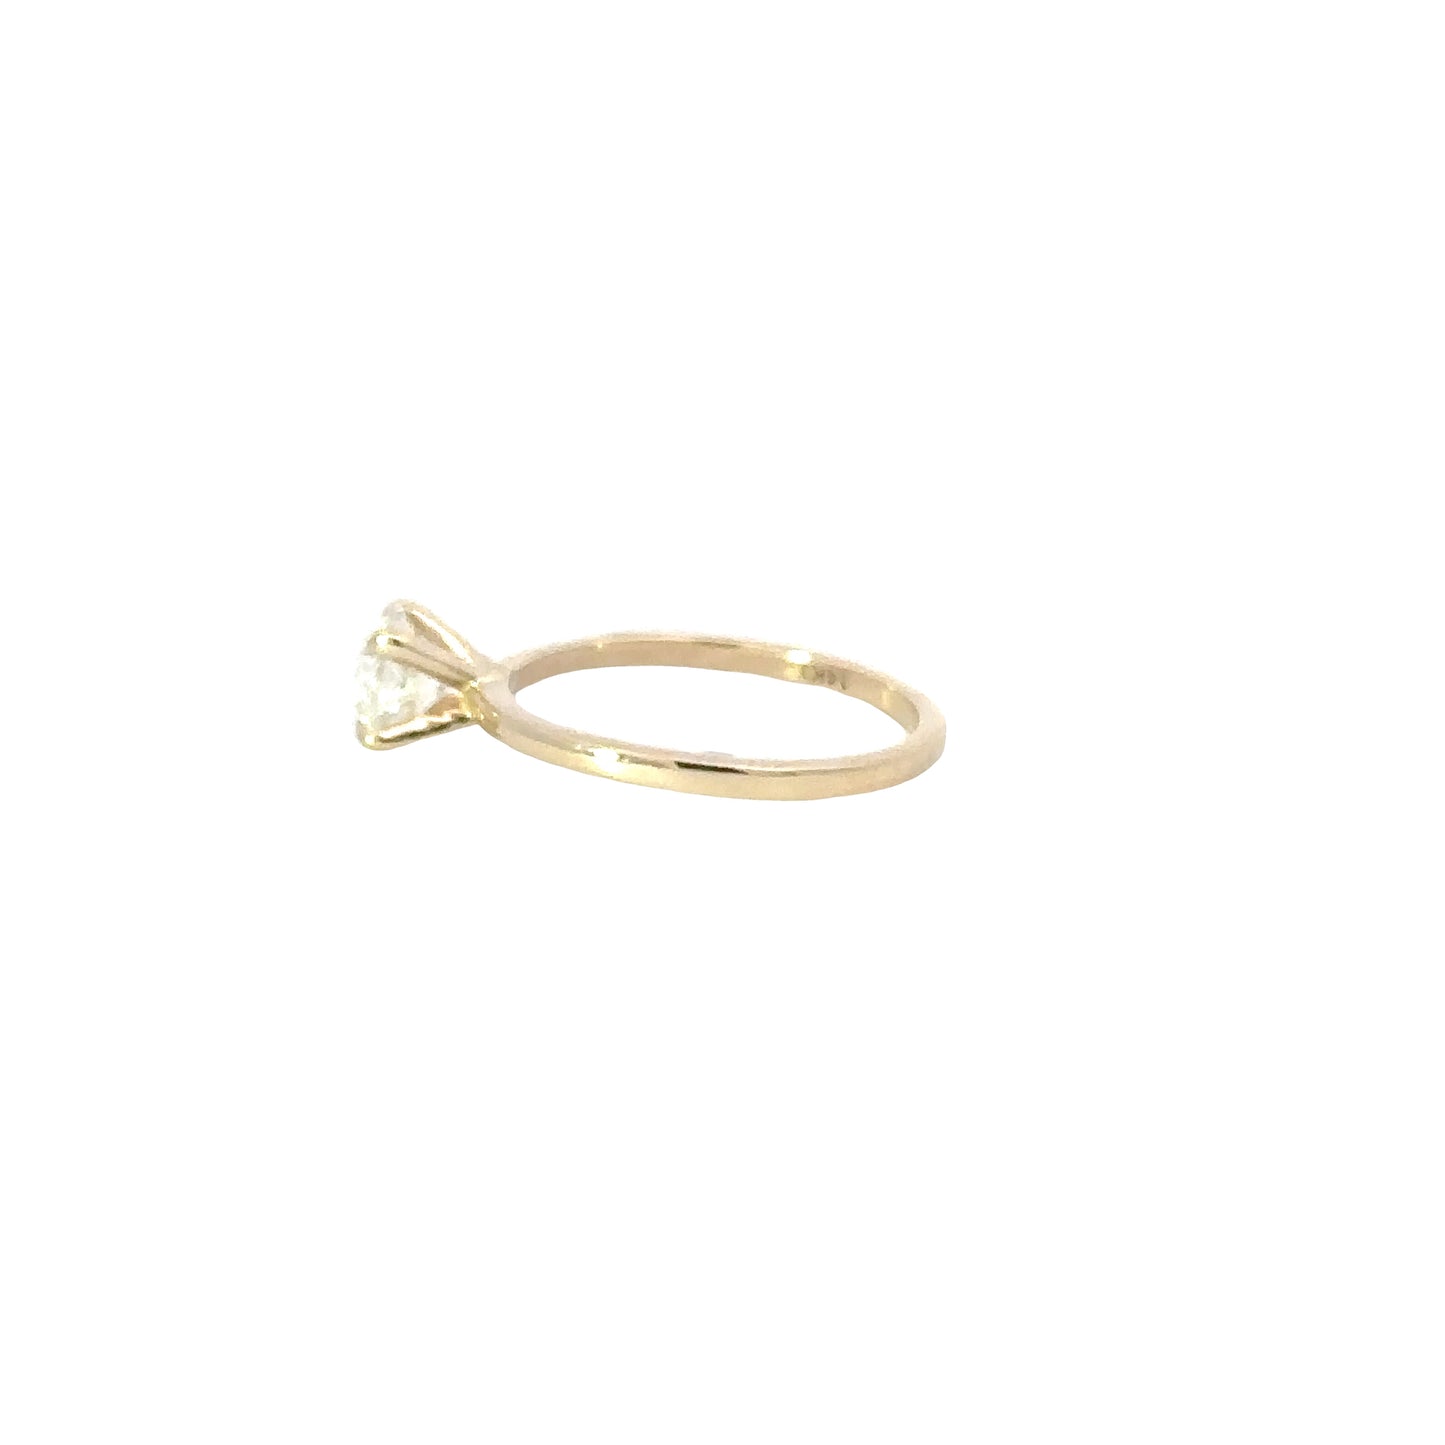 1.01 Carat Natural Round Diamond Engagement Ring - Happy Jewelers Fine Jewelry Lifetime Warranty